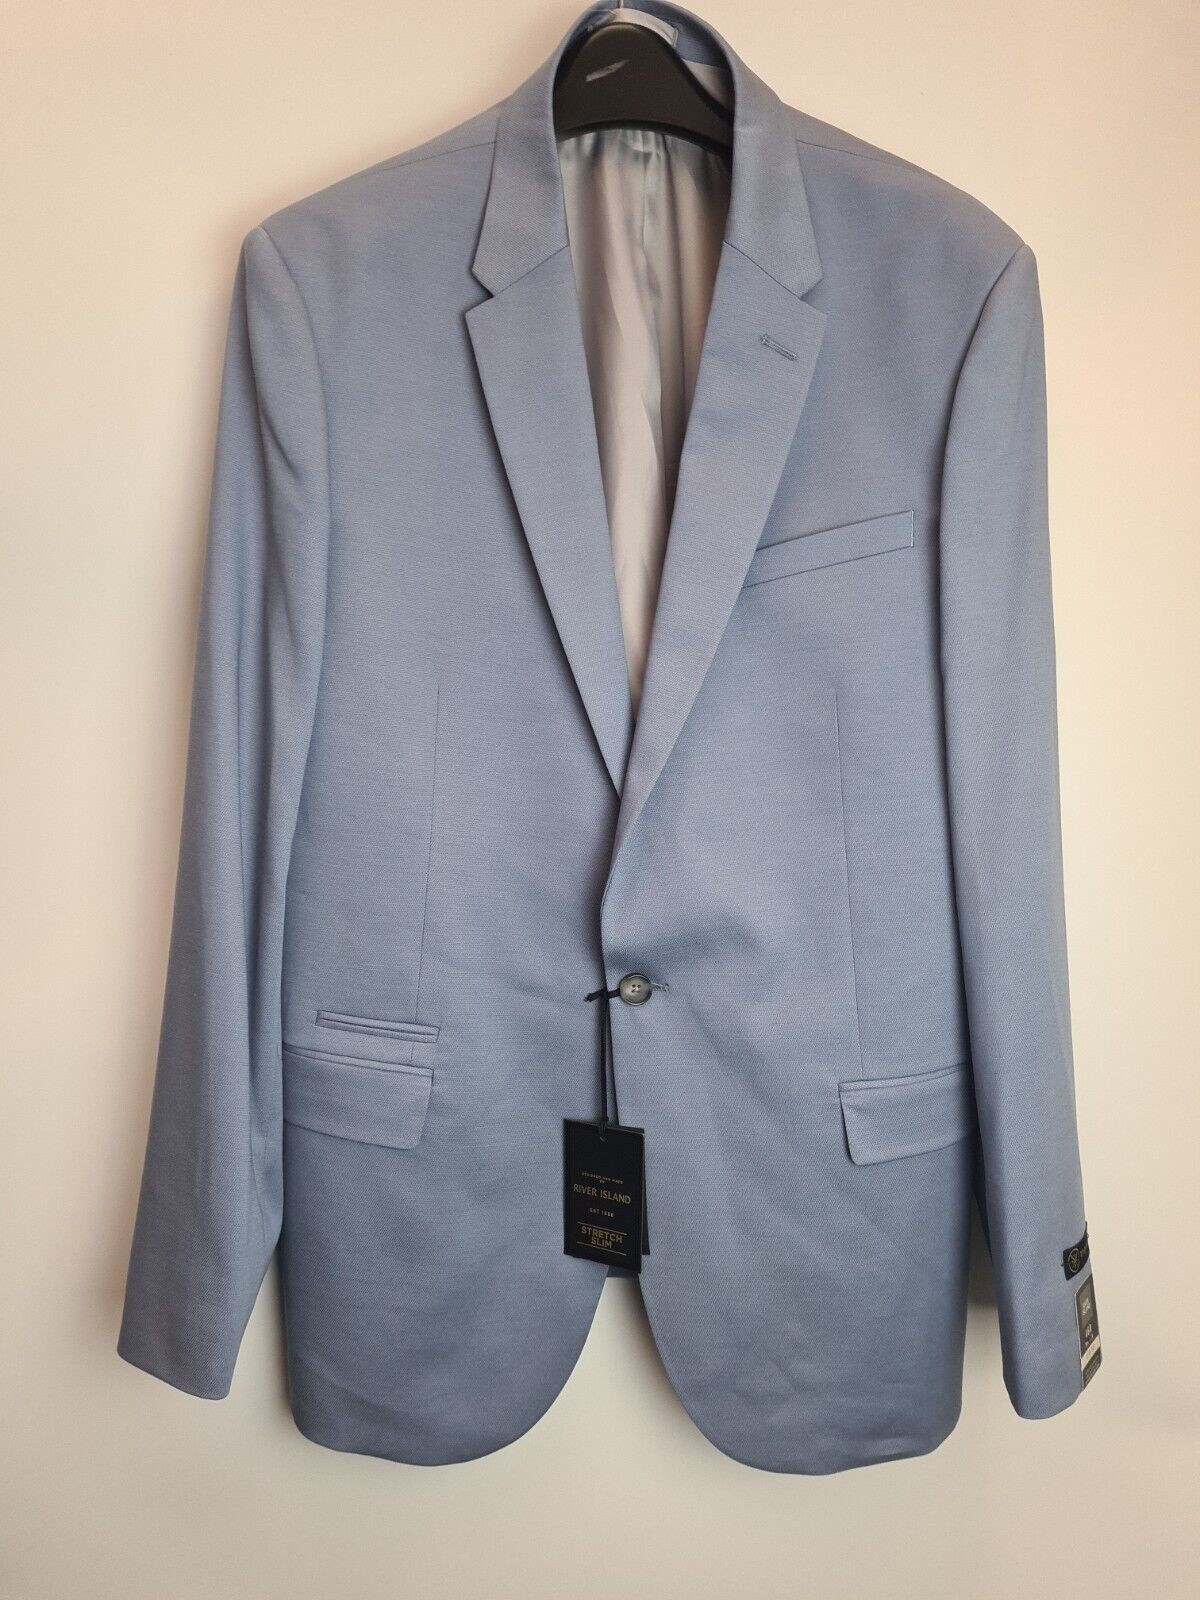 River Island Mens Slim Fit Blue Suit Jacket Blazer Size 38R **** VH5